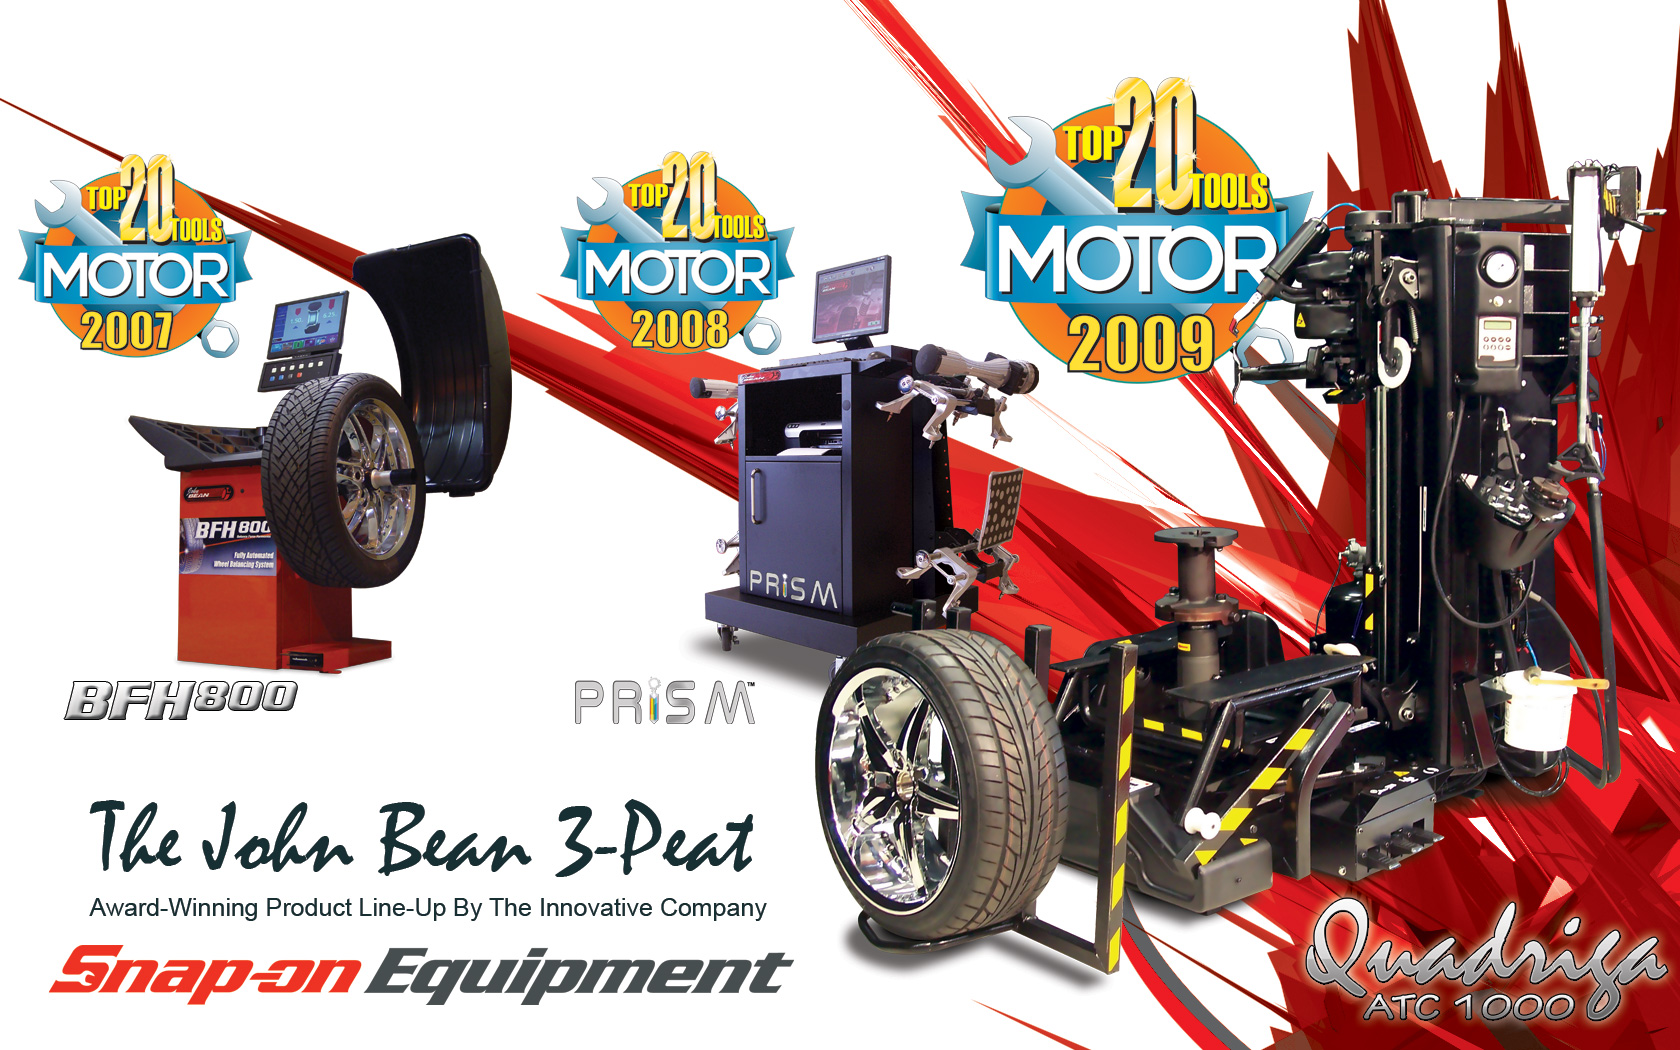 John Bean Automotive Wheel Service Equipment: Press Releases ...